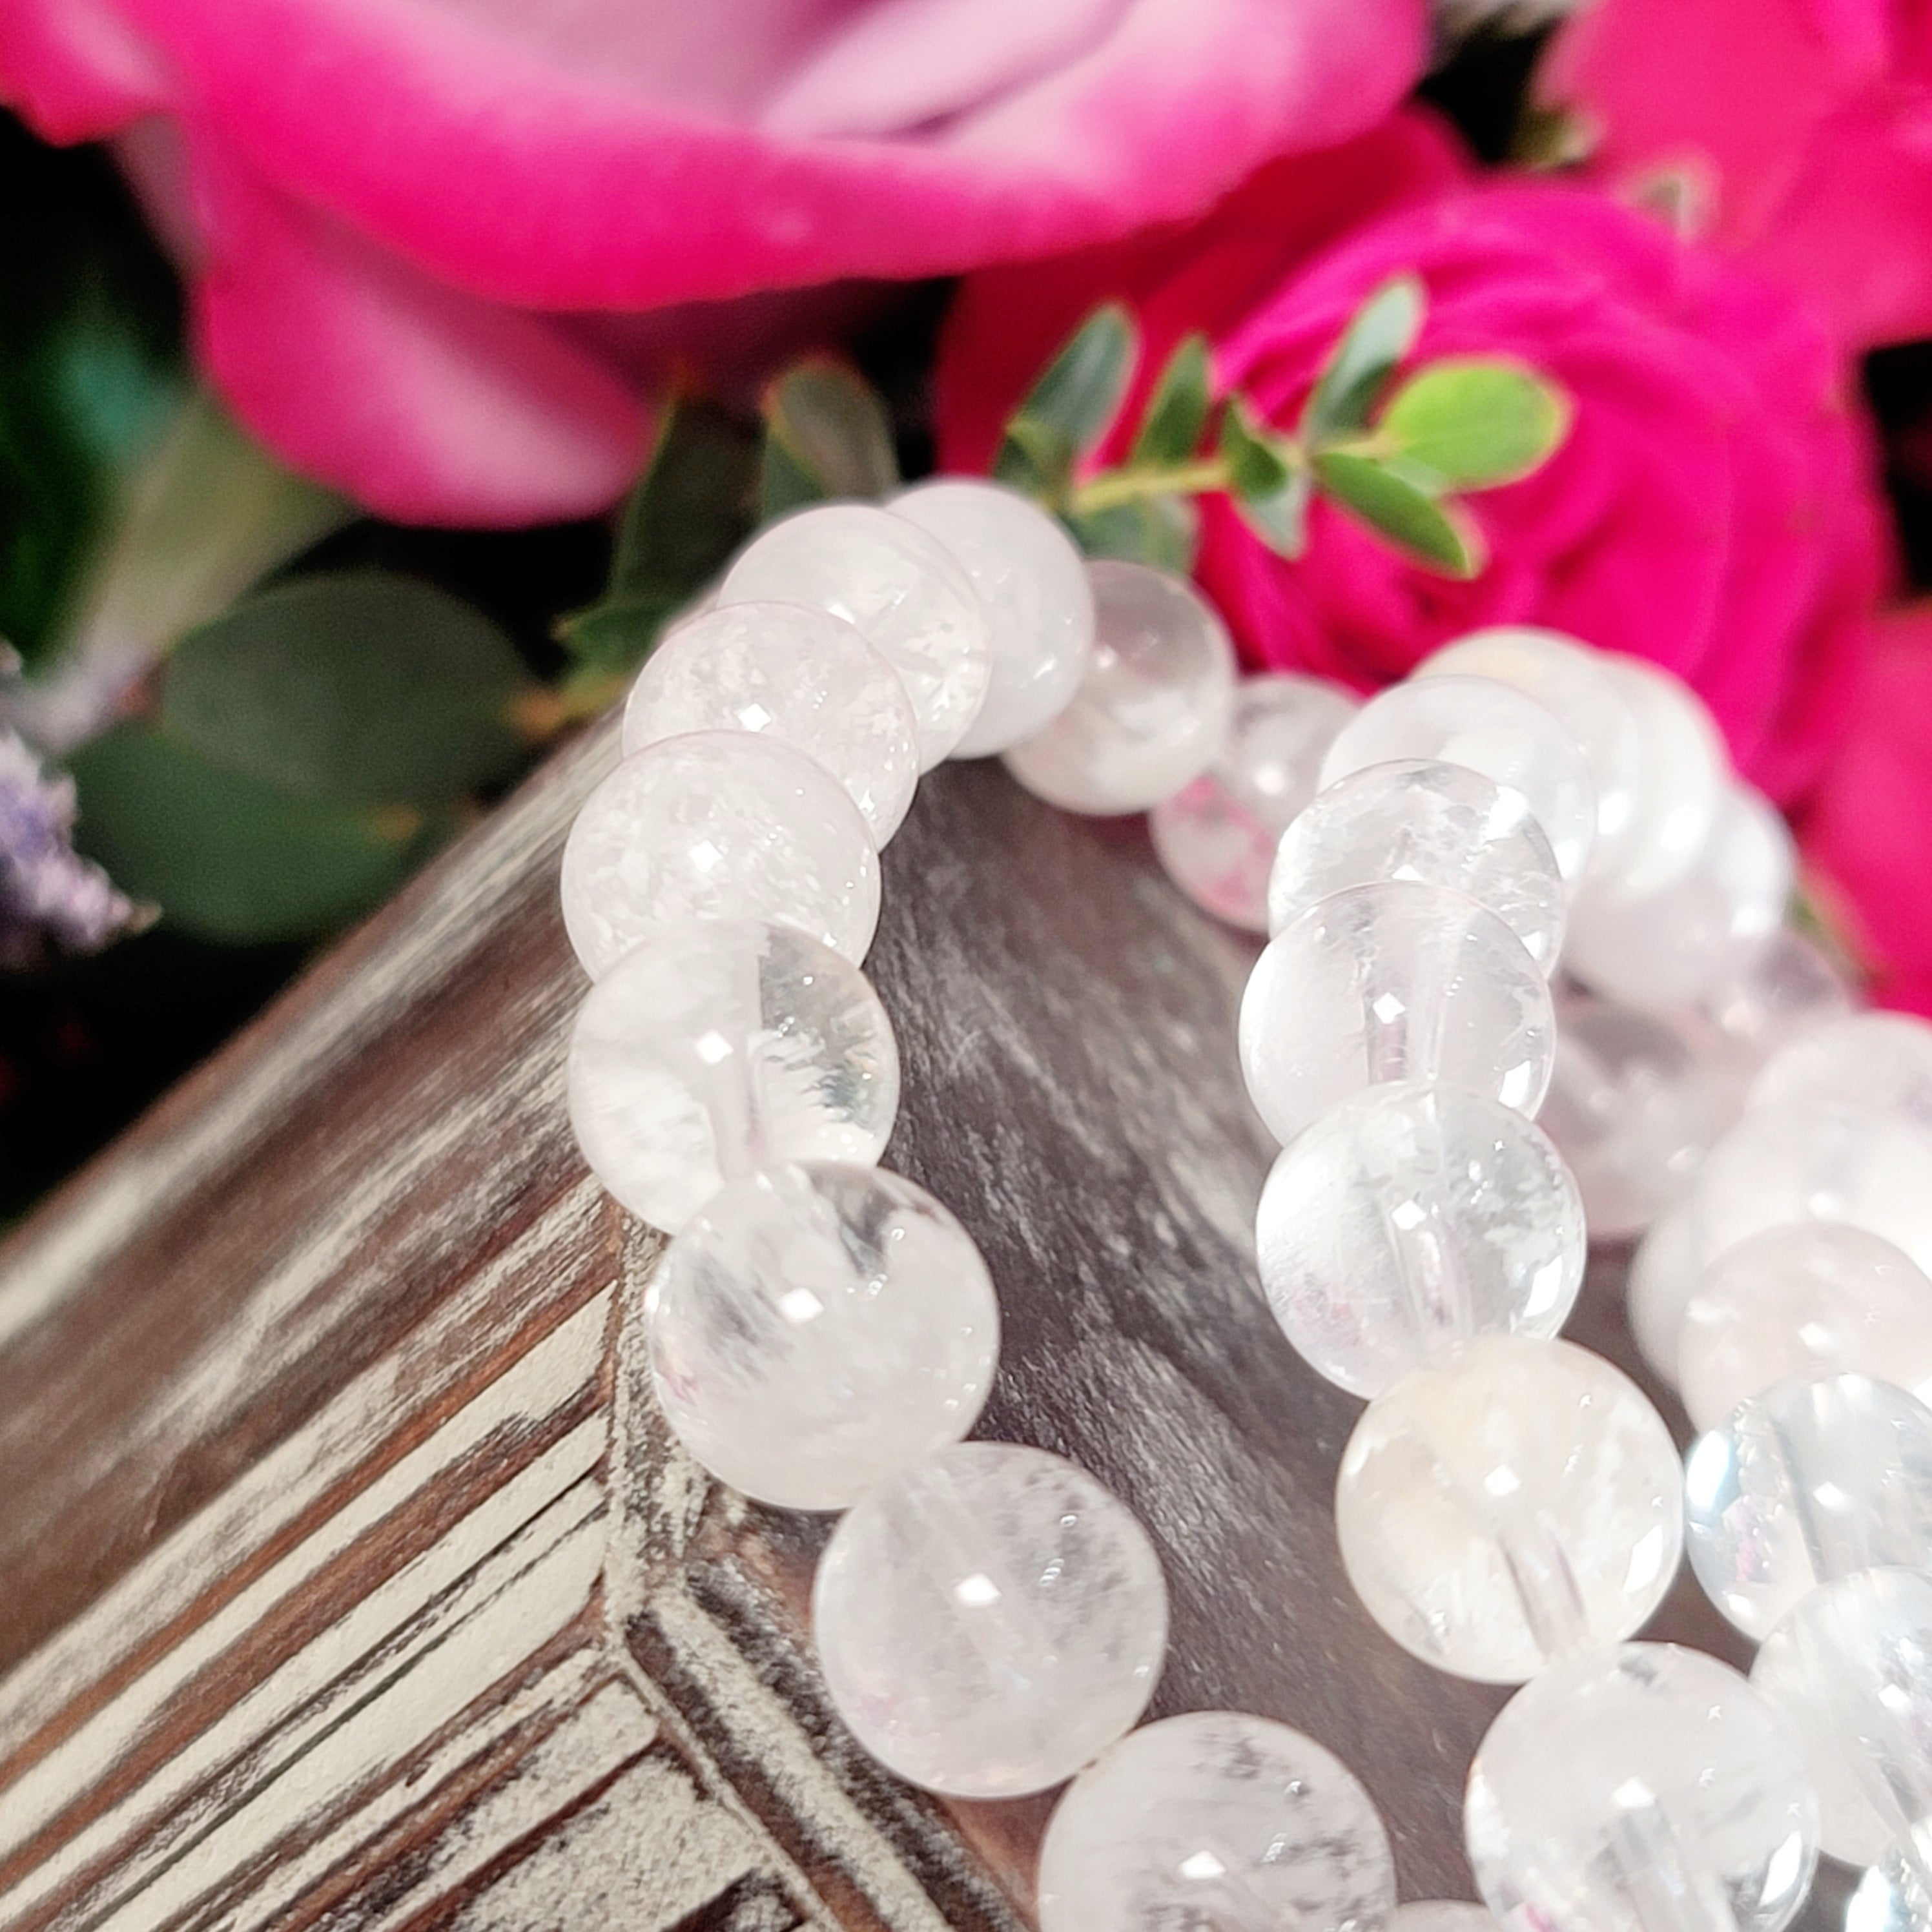 White Lodalite Garden Quartz Bracelet for Compassion and Self Love